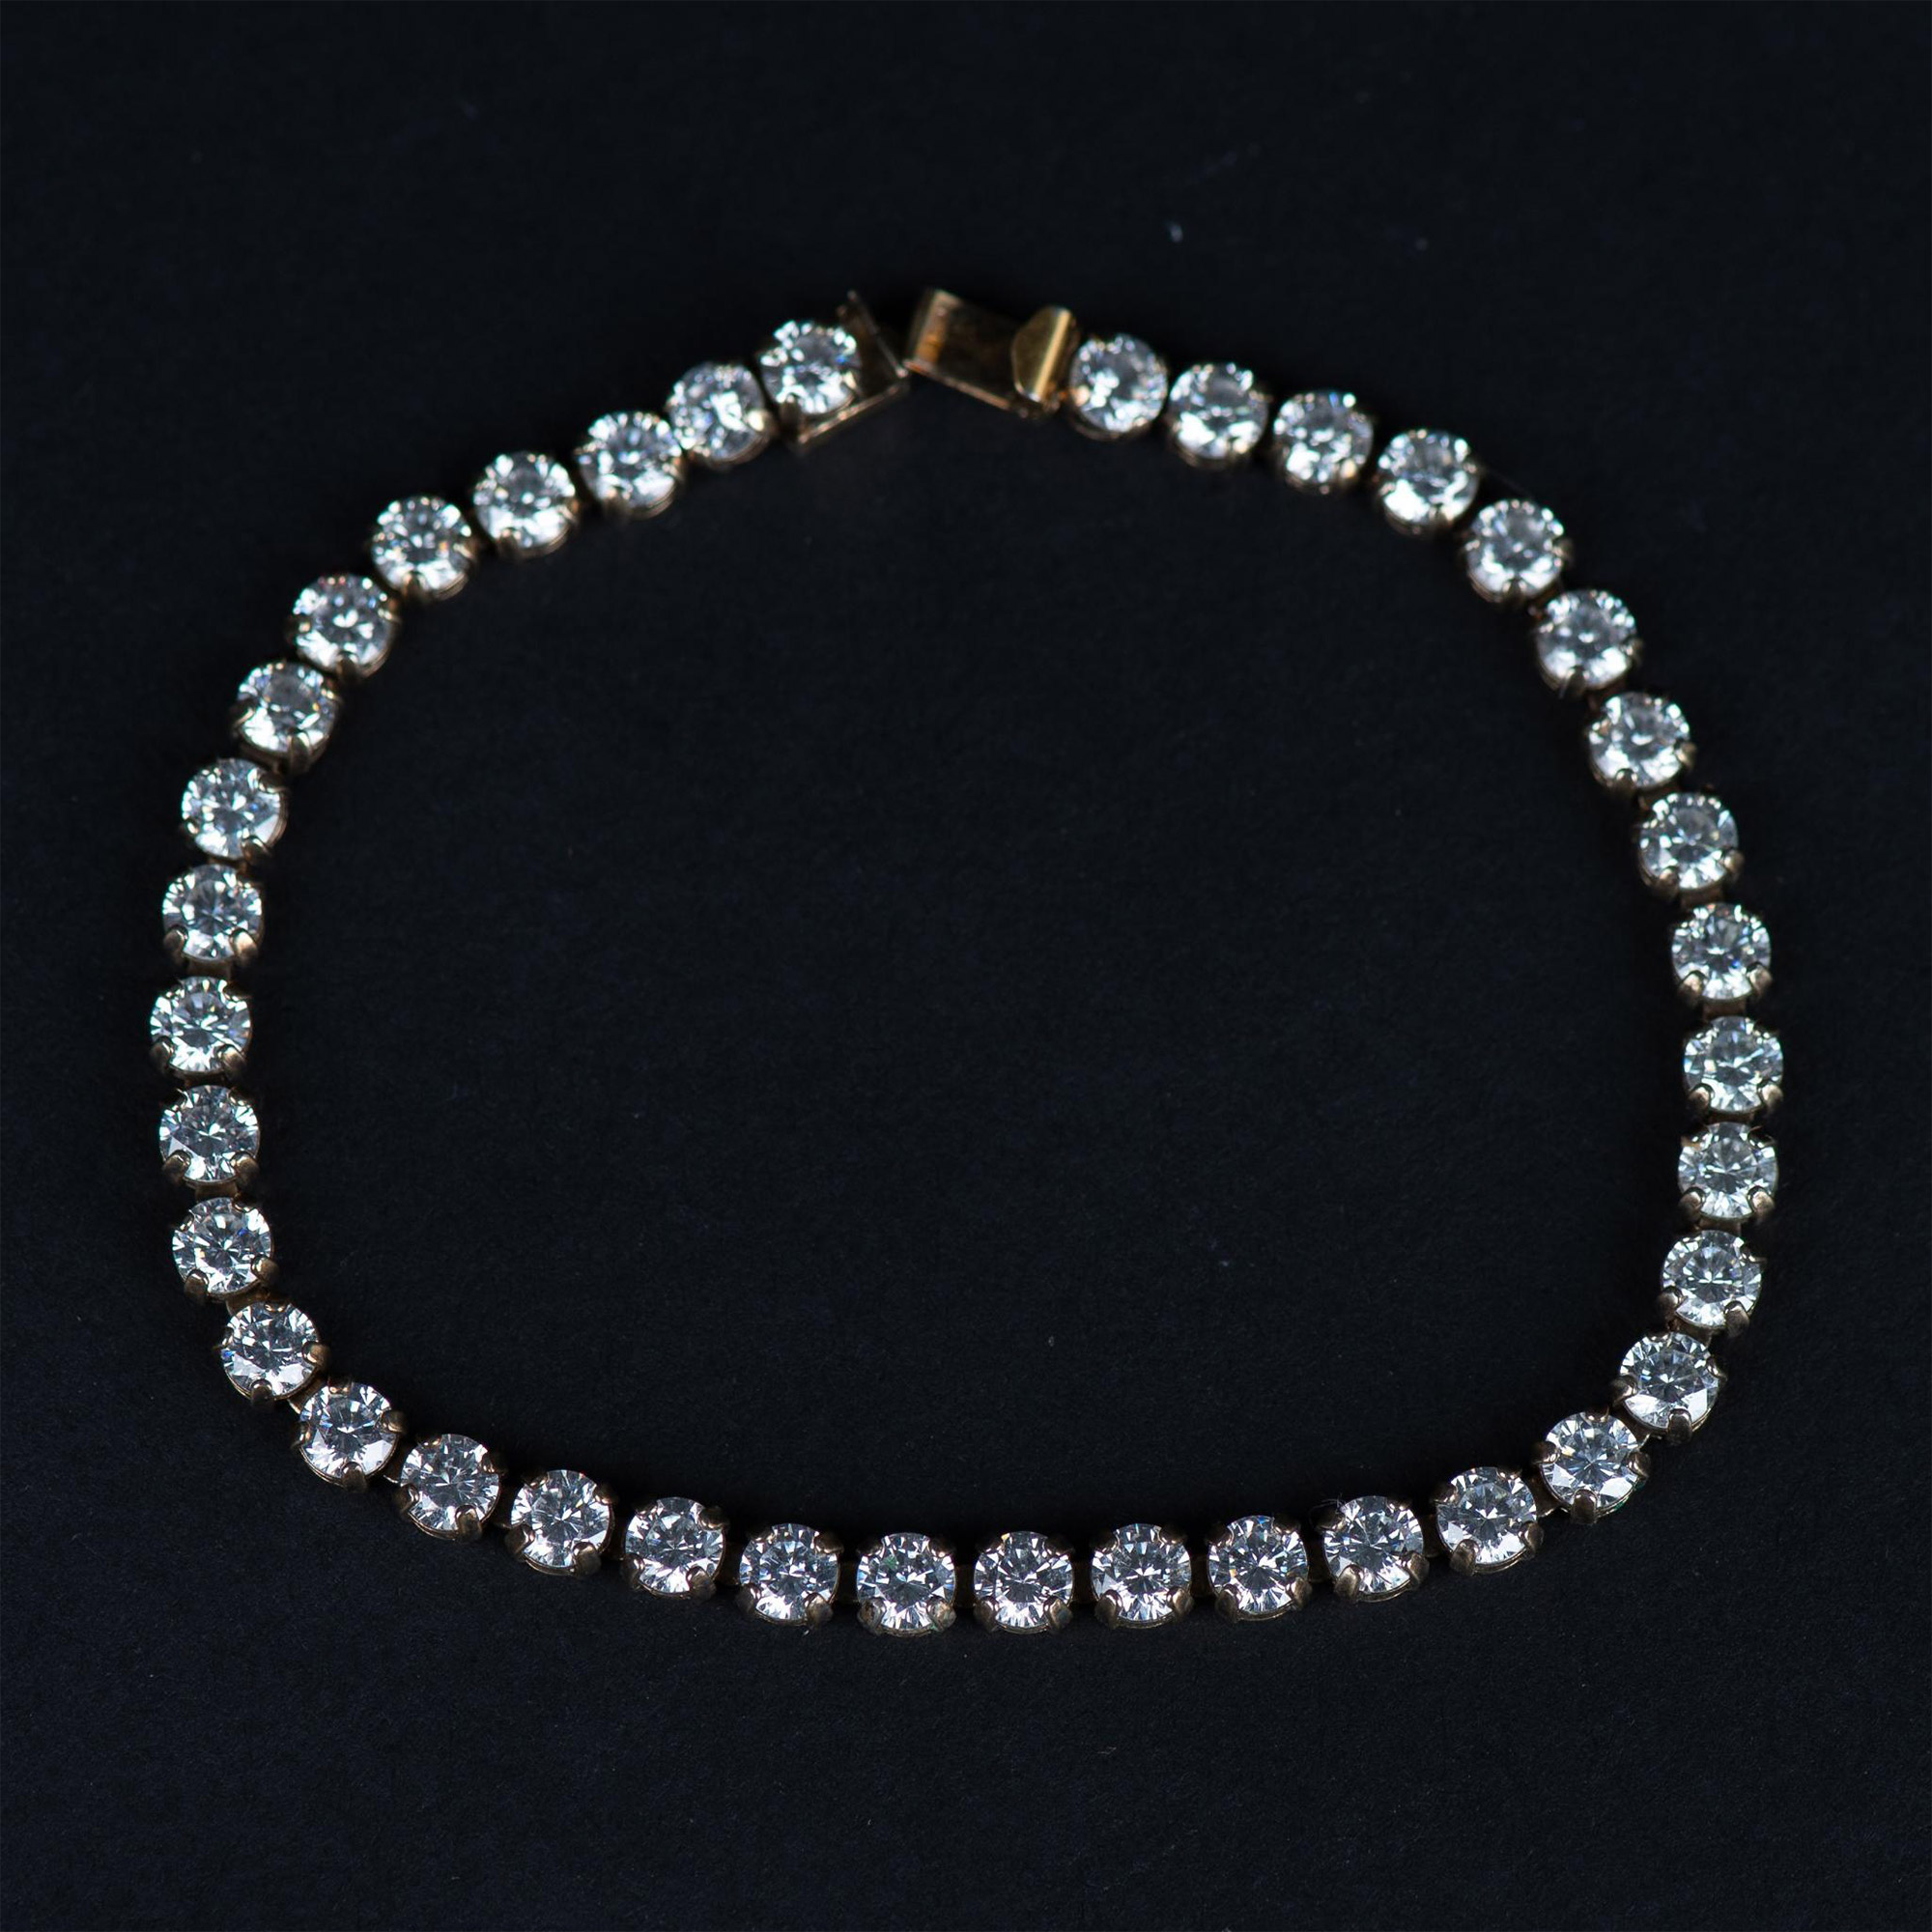 Classy Sterling Silver Crystal Bracelet - Image 3 of 4